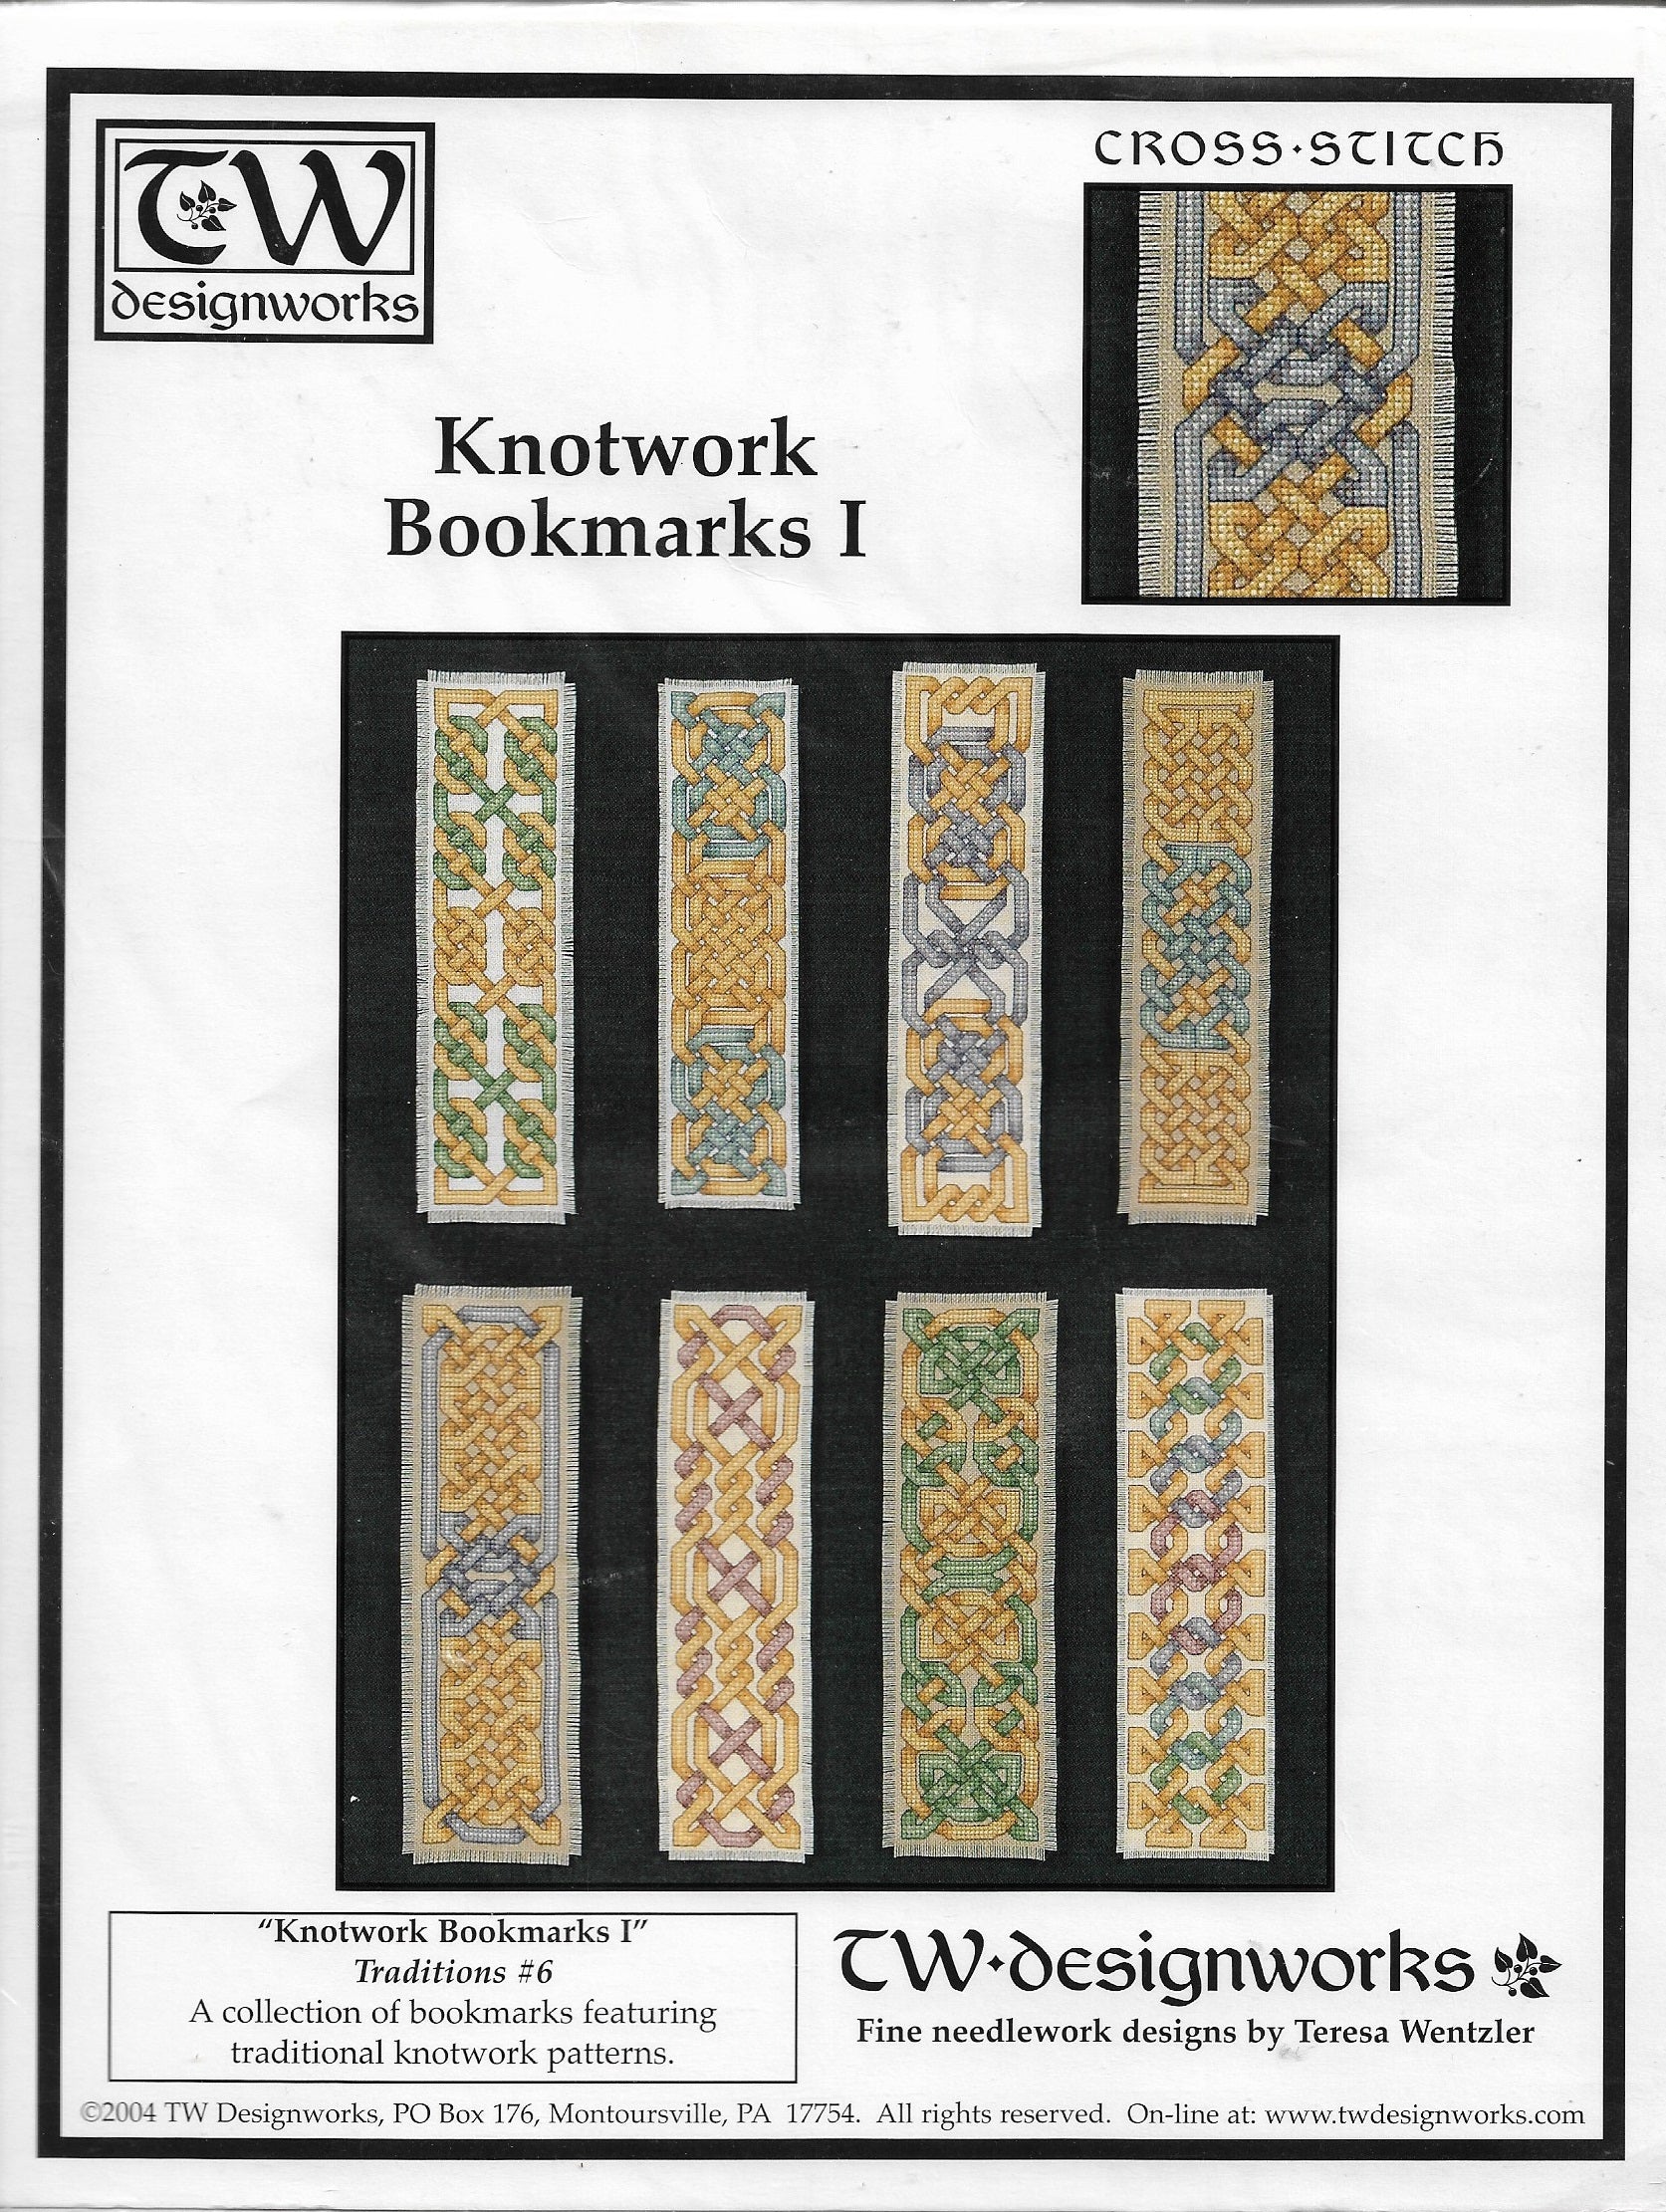 TW Designworks Teresa Wentzler Knowork Bookmarks I cross stitch pattern